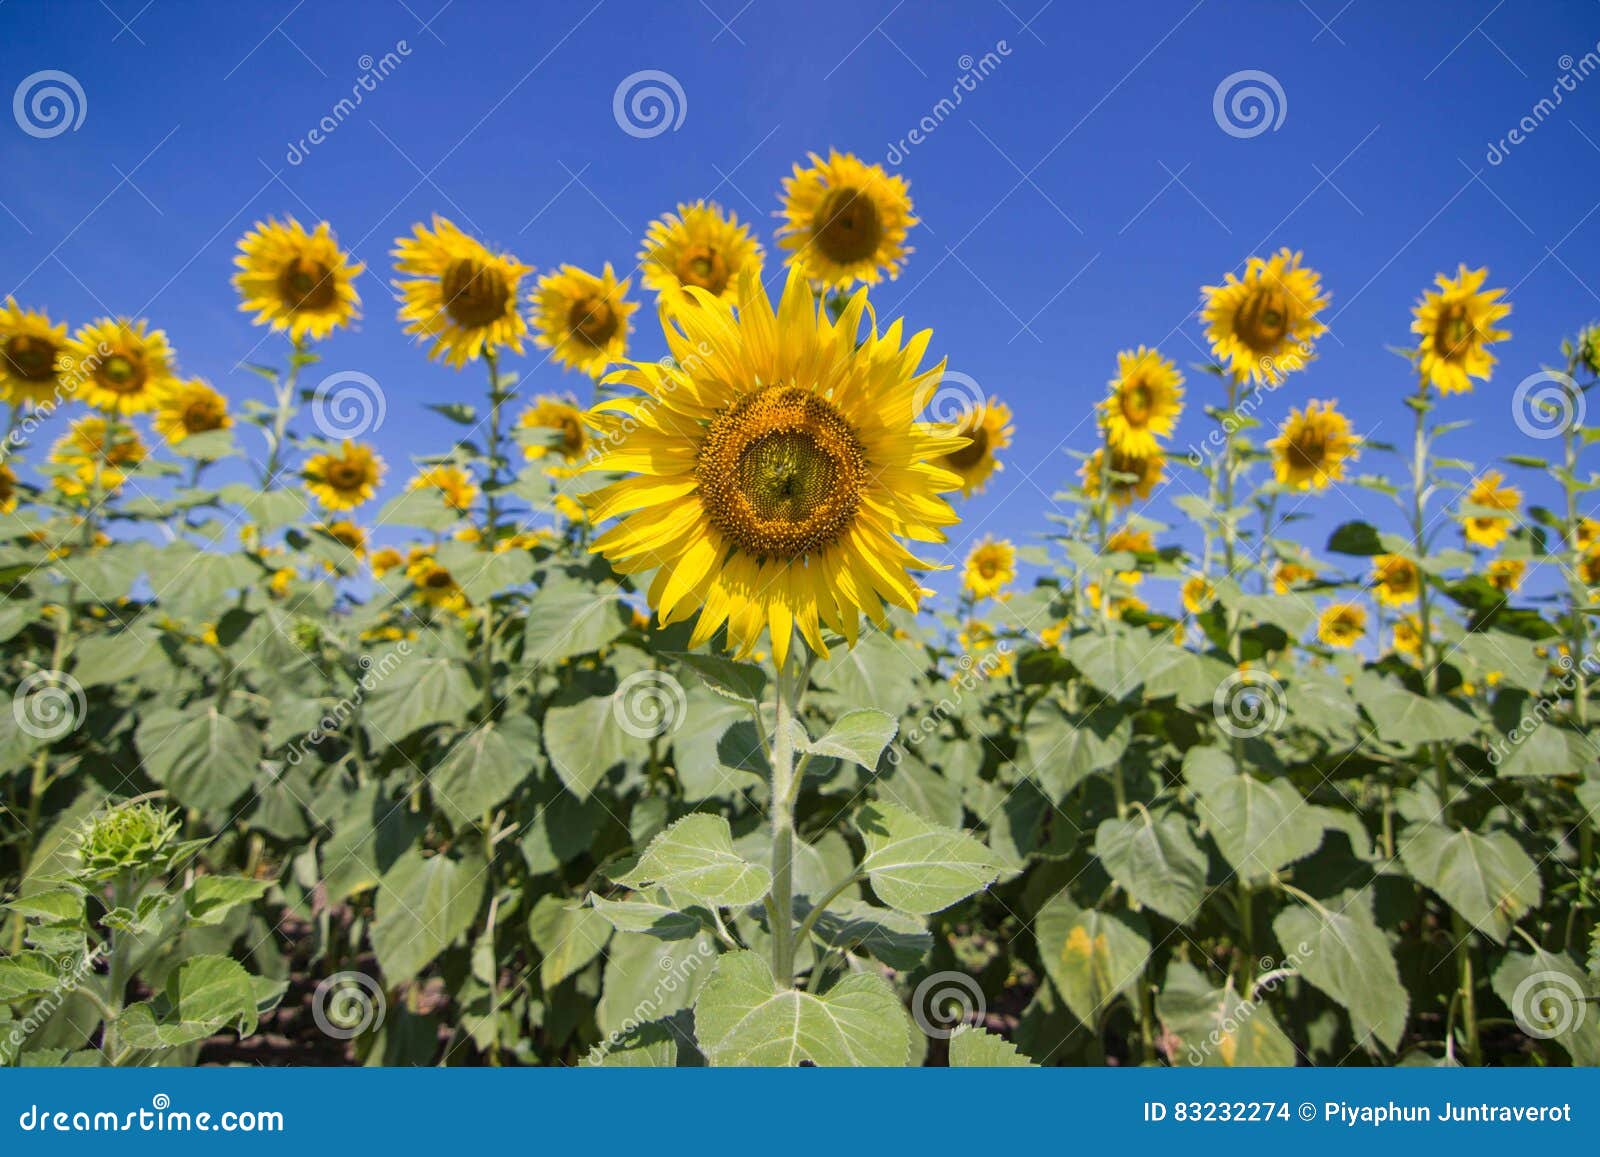 Sunflower stock photo. Image of garden, combination, bright - 83232274